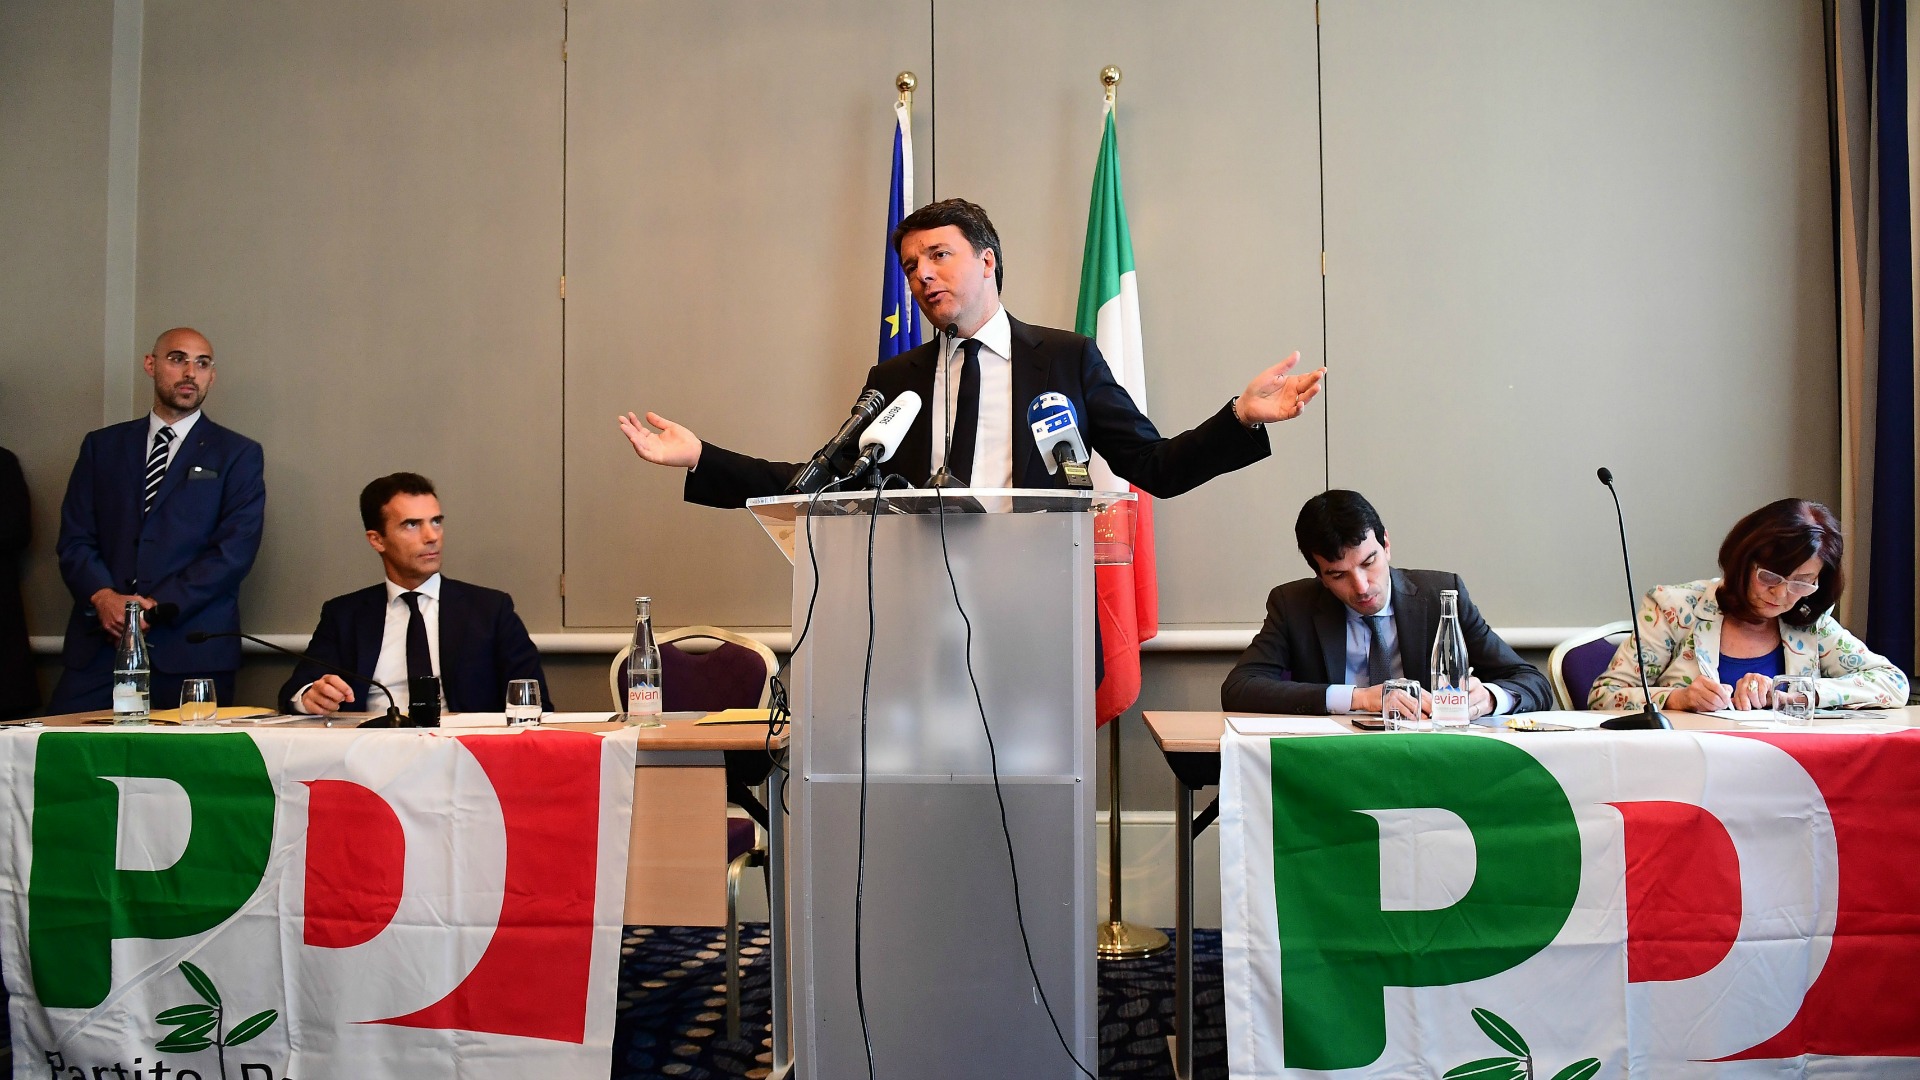 Matteo Renzi regresa a la carrera electoral tras vencer en las primarias del Partido Demócrata